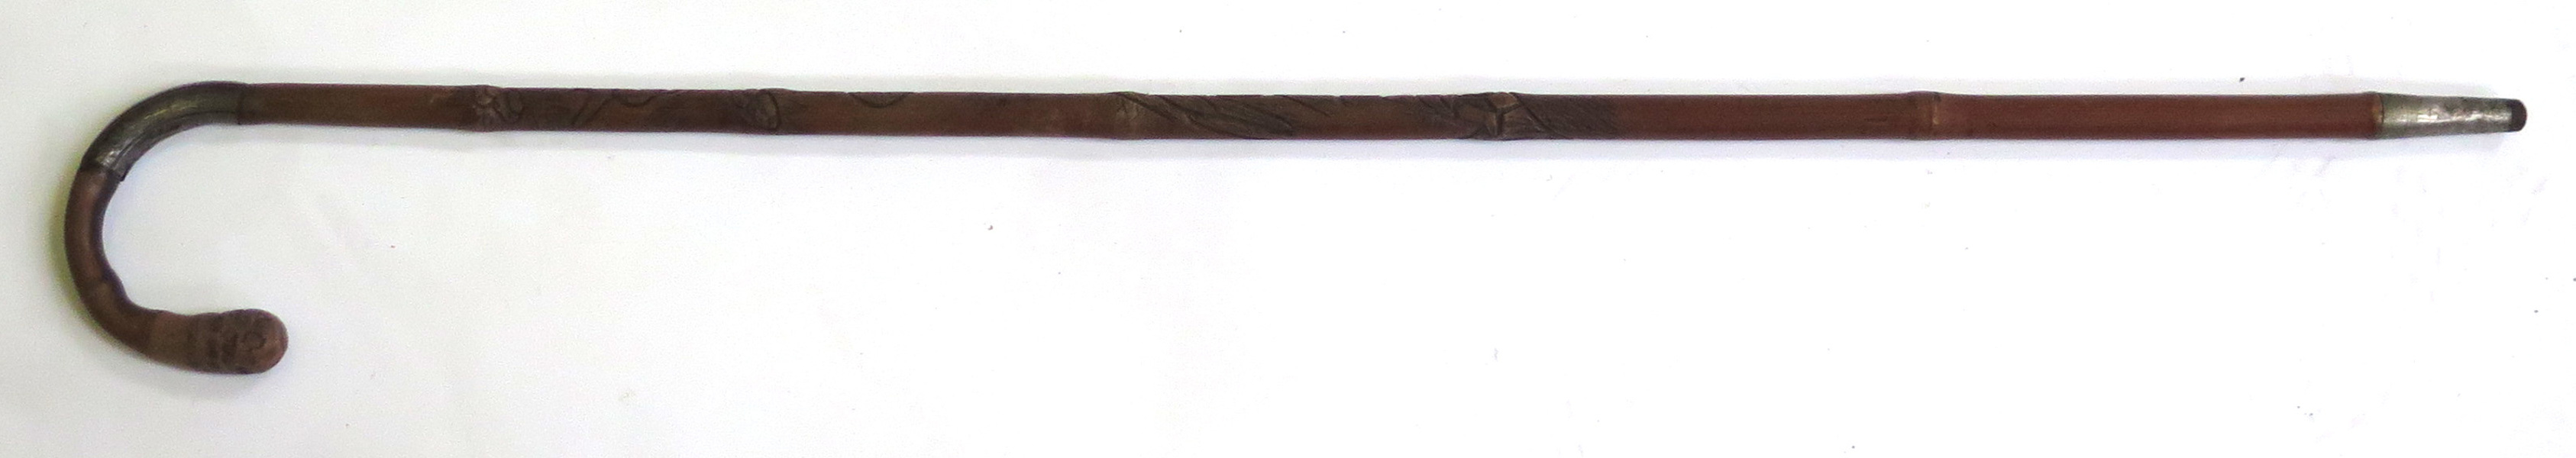 Käpp, bambu med silver(?)montage, antagligen Kina, sekelskiftet 1900,_14977a_lg.jpeg